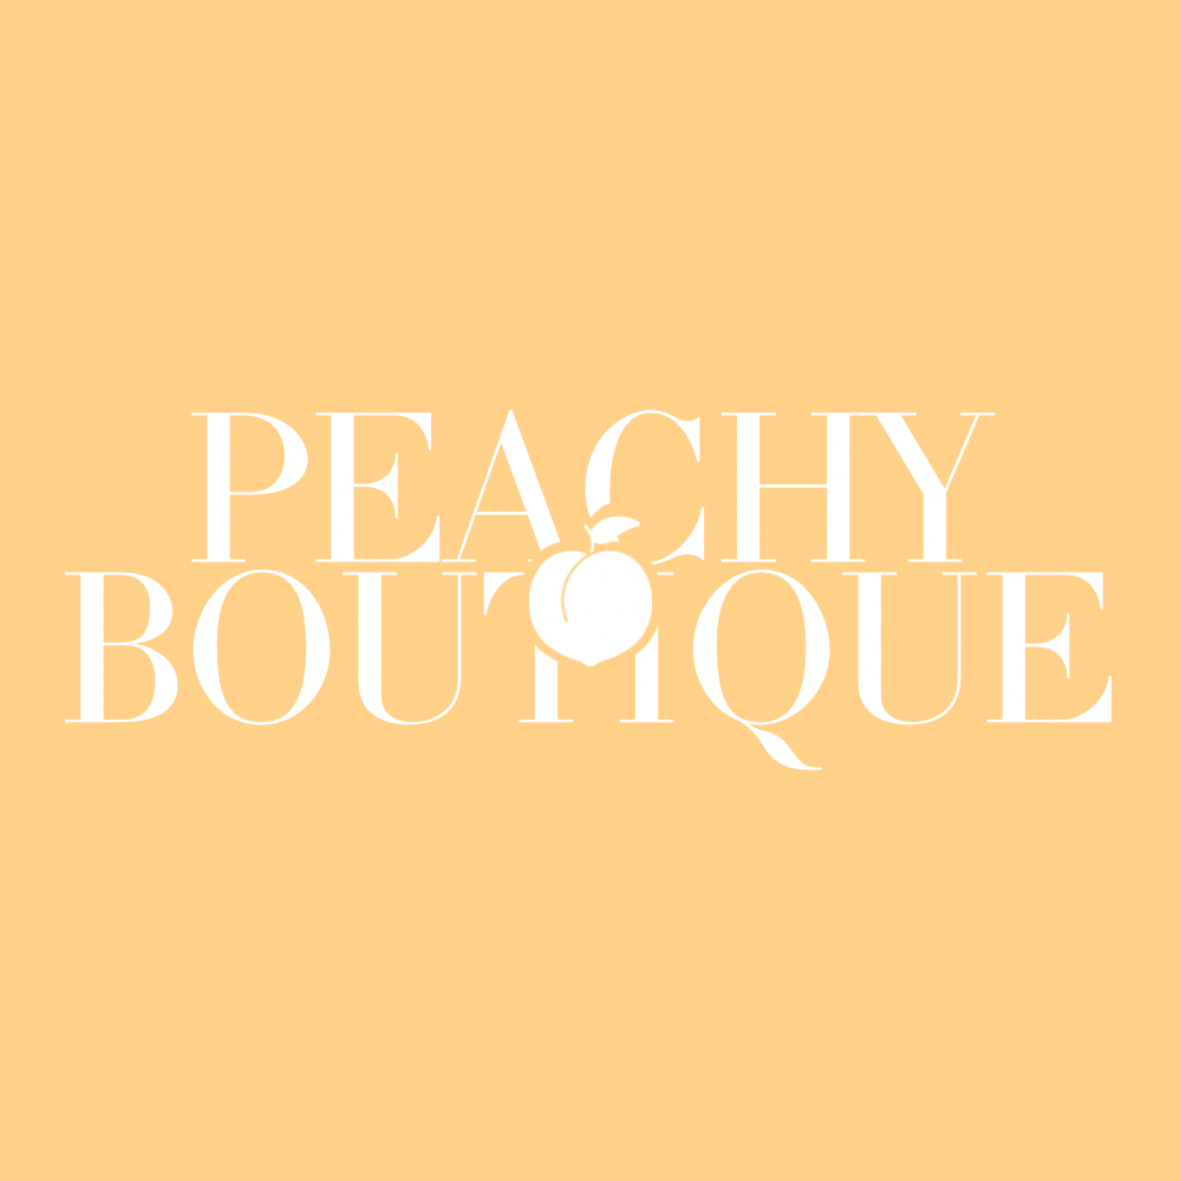 Peachy Boutique